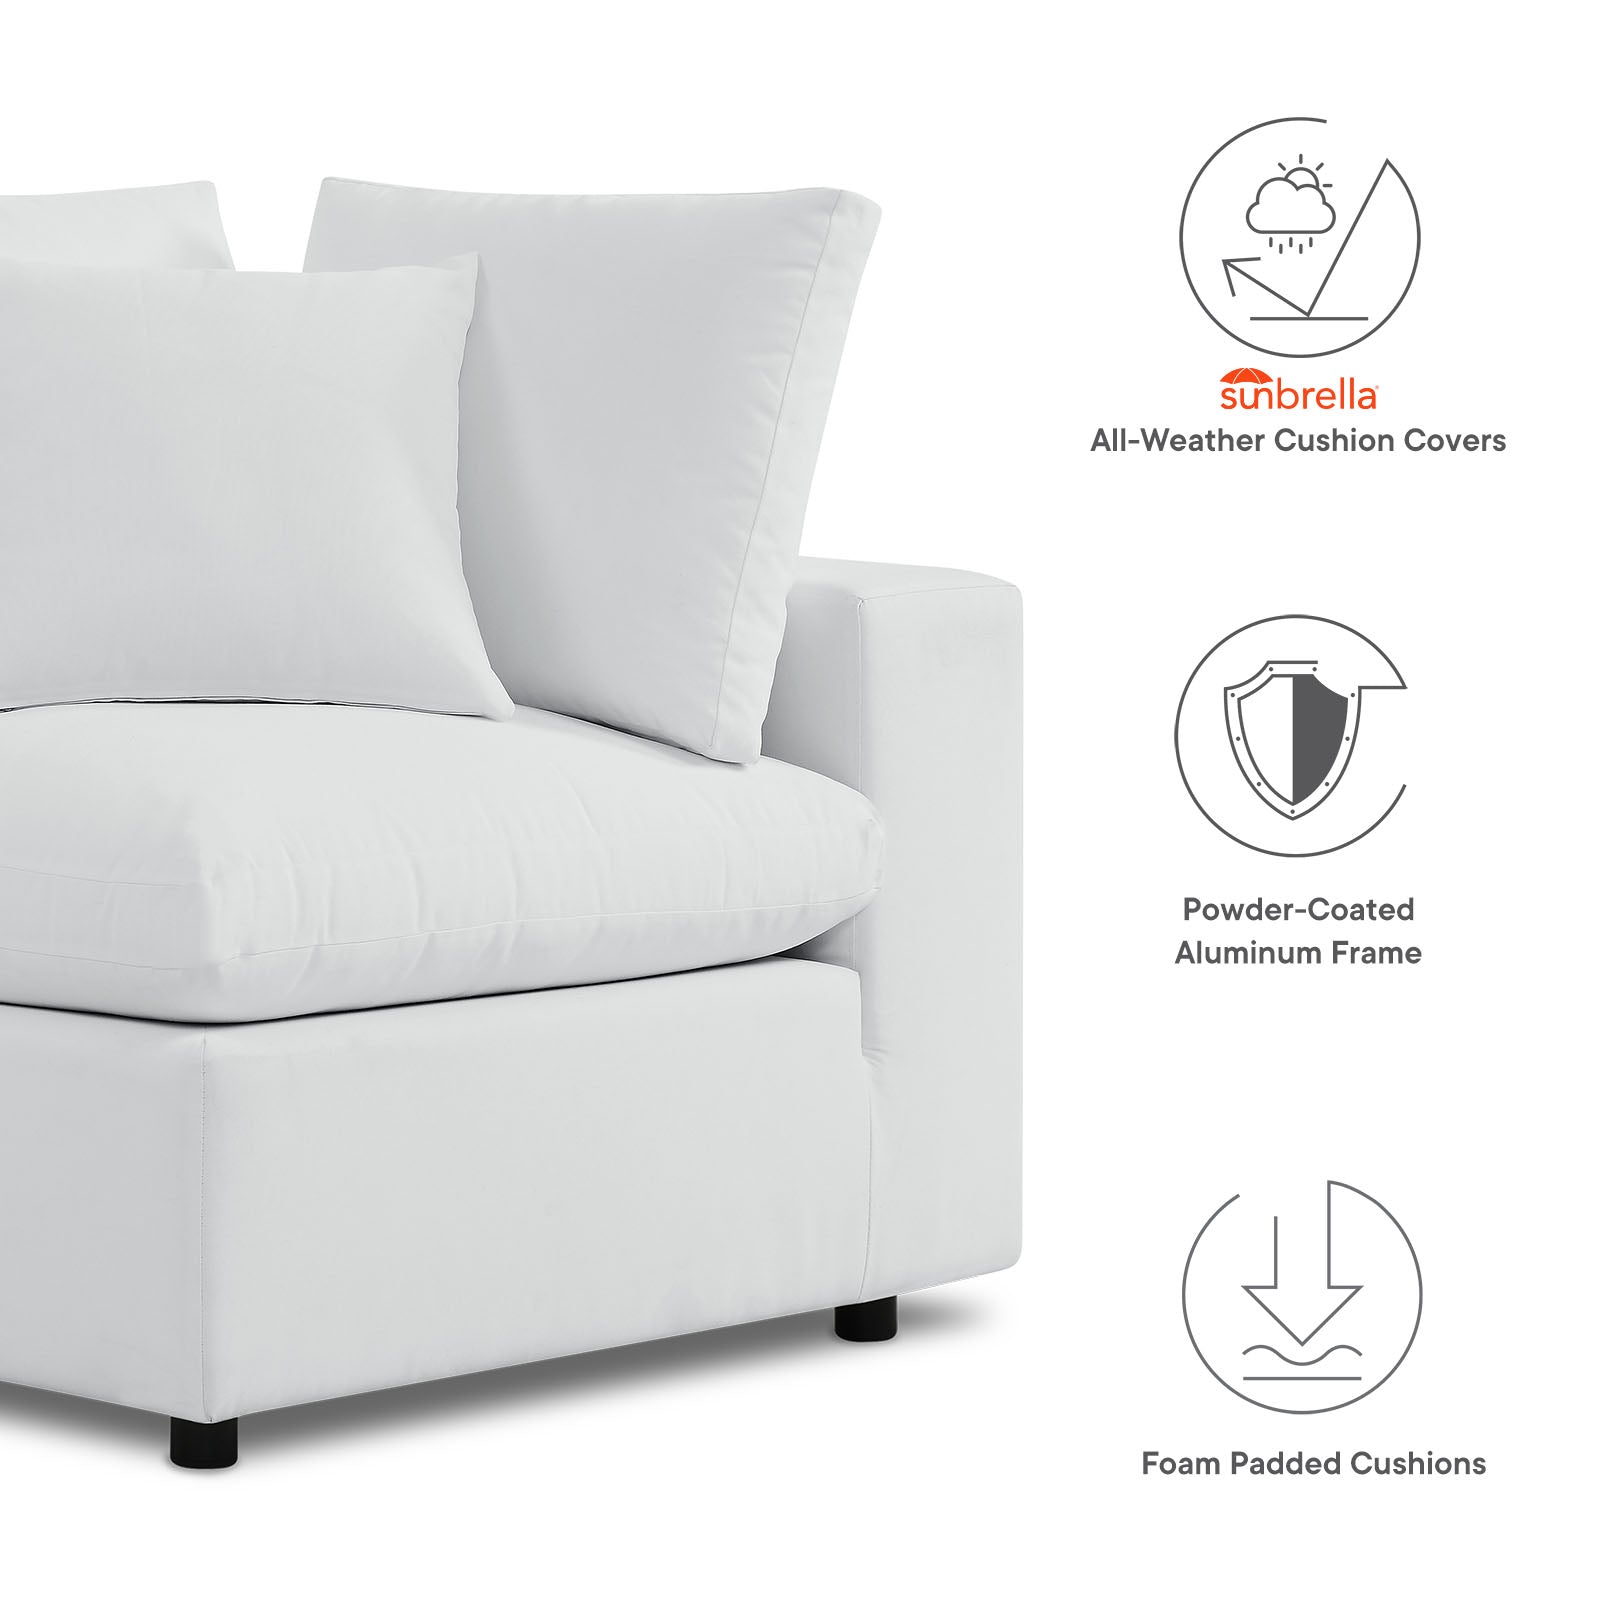 Modway Outdoor Sofas - Commix 7-Piece Sunbrella Outdoor Patio Sectional Sofa White